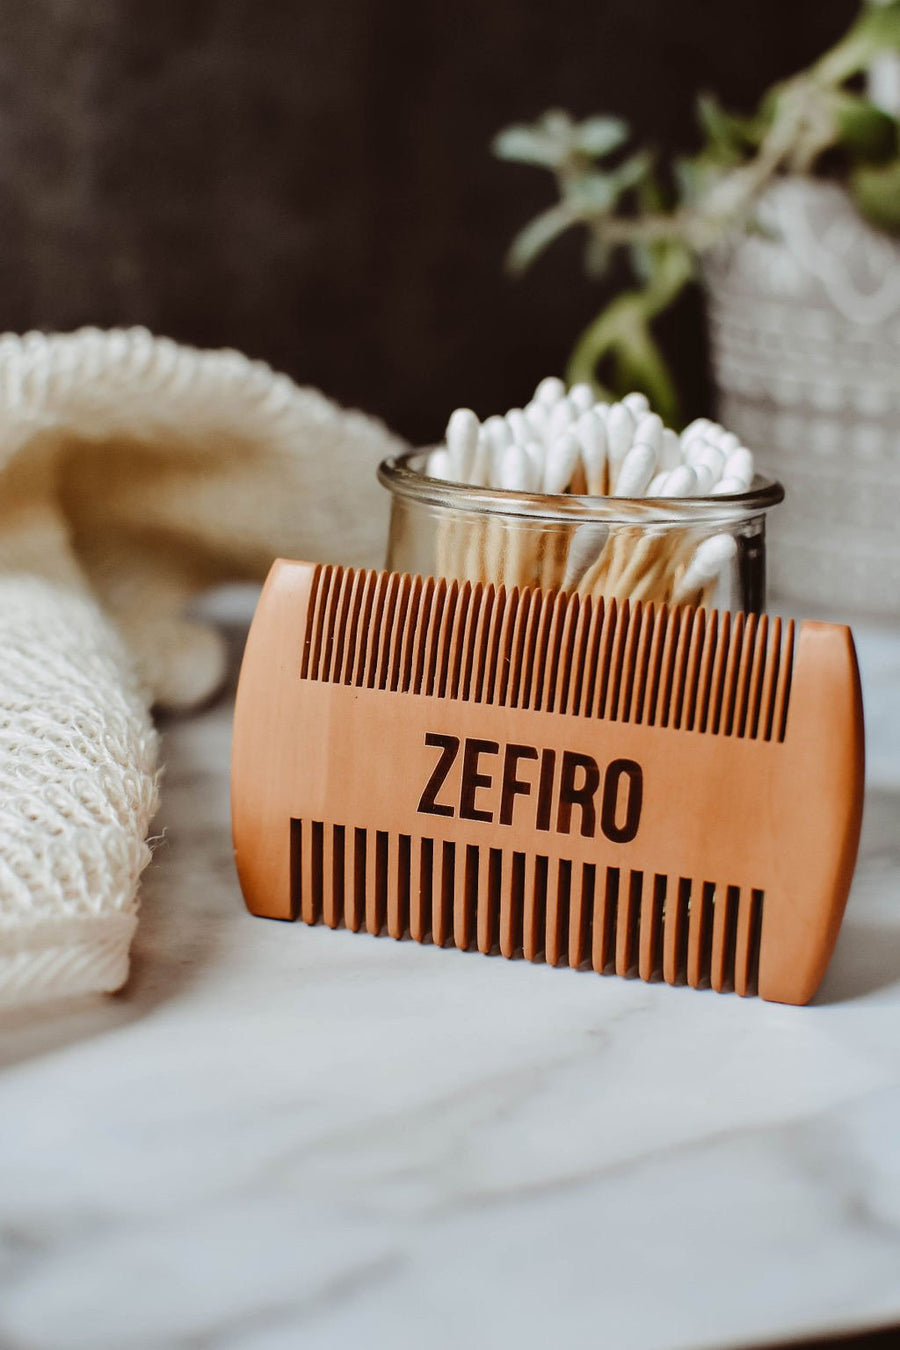 'Zefiro' Beard Comb